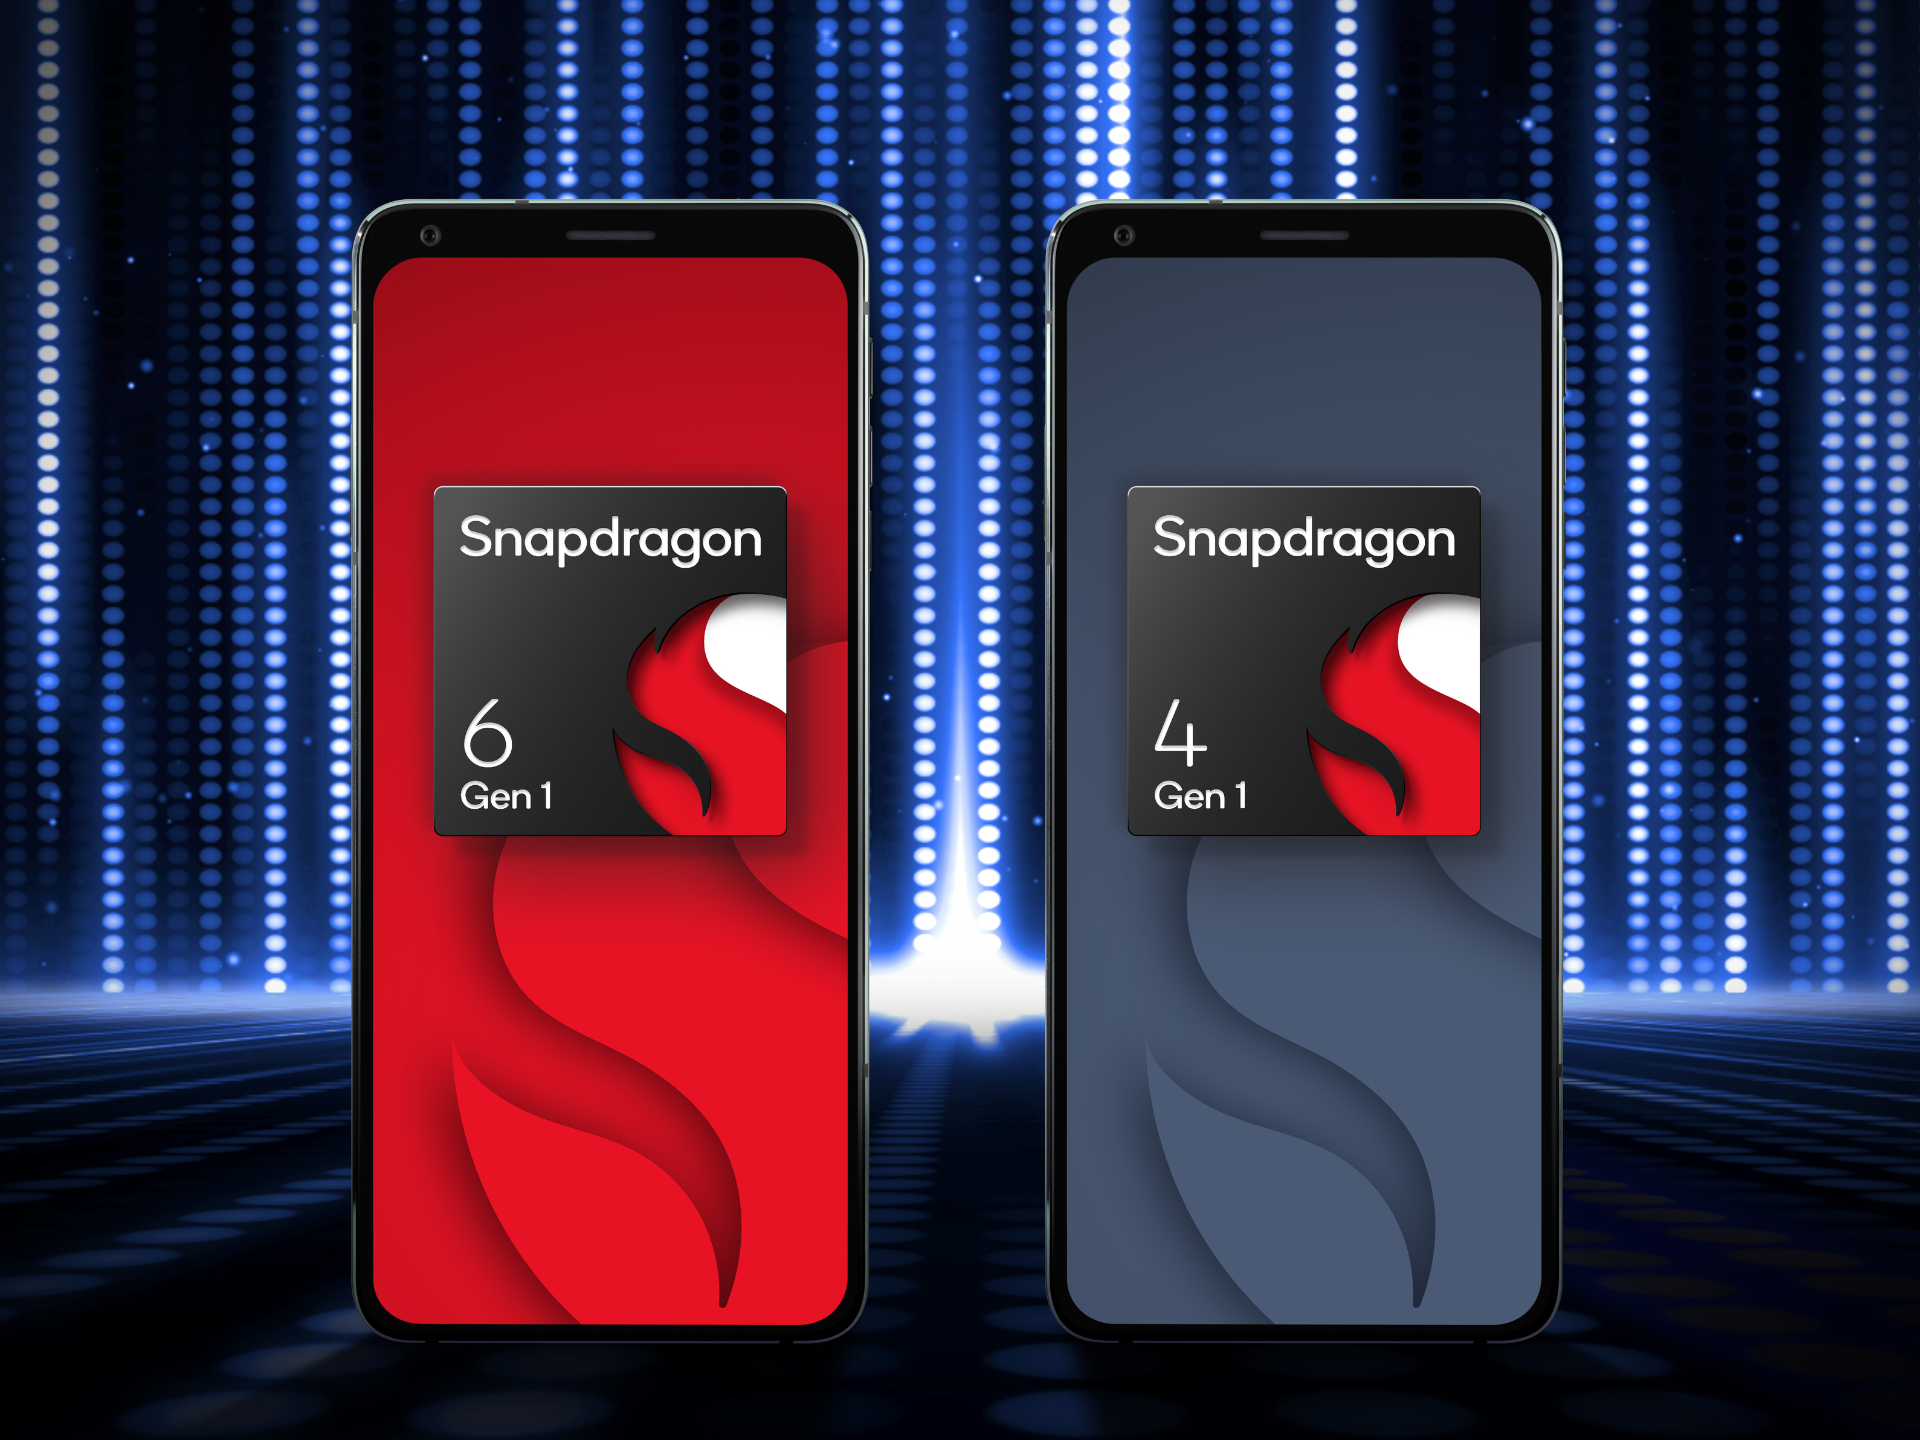 LI Snapdragon 6 Gen 1 and Snapdragon 4 Gen 1 phones